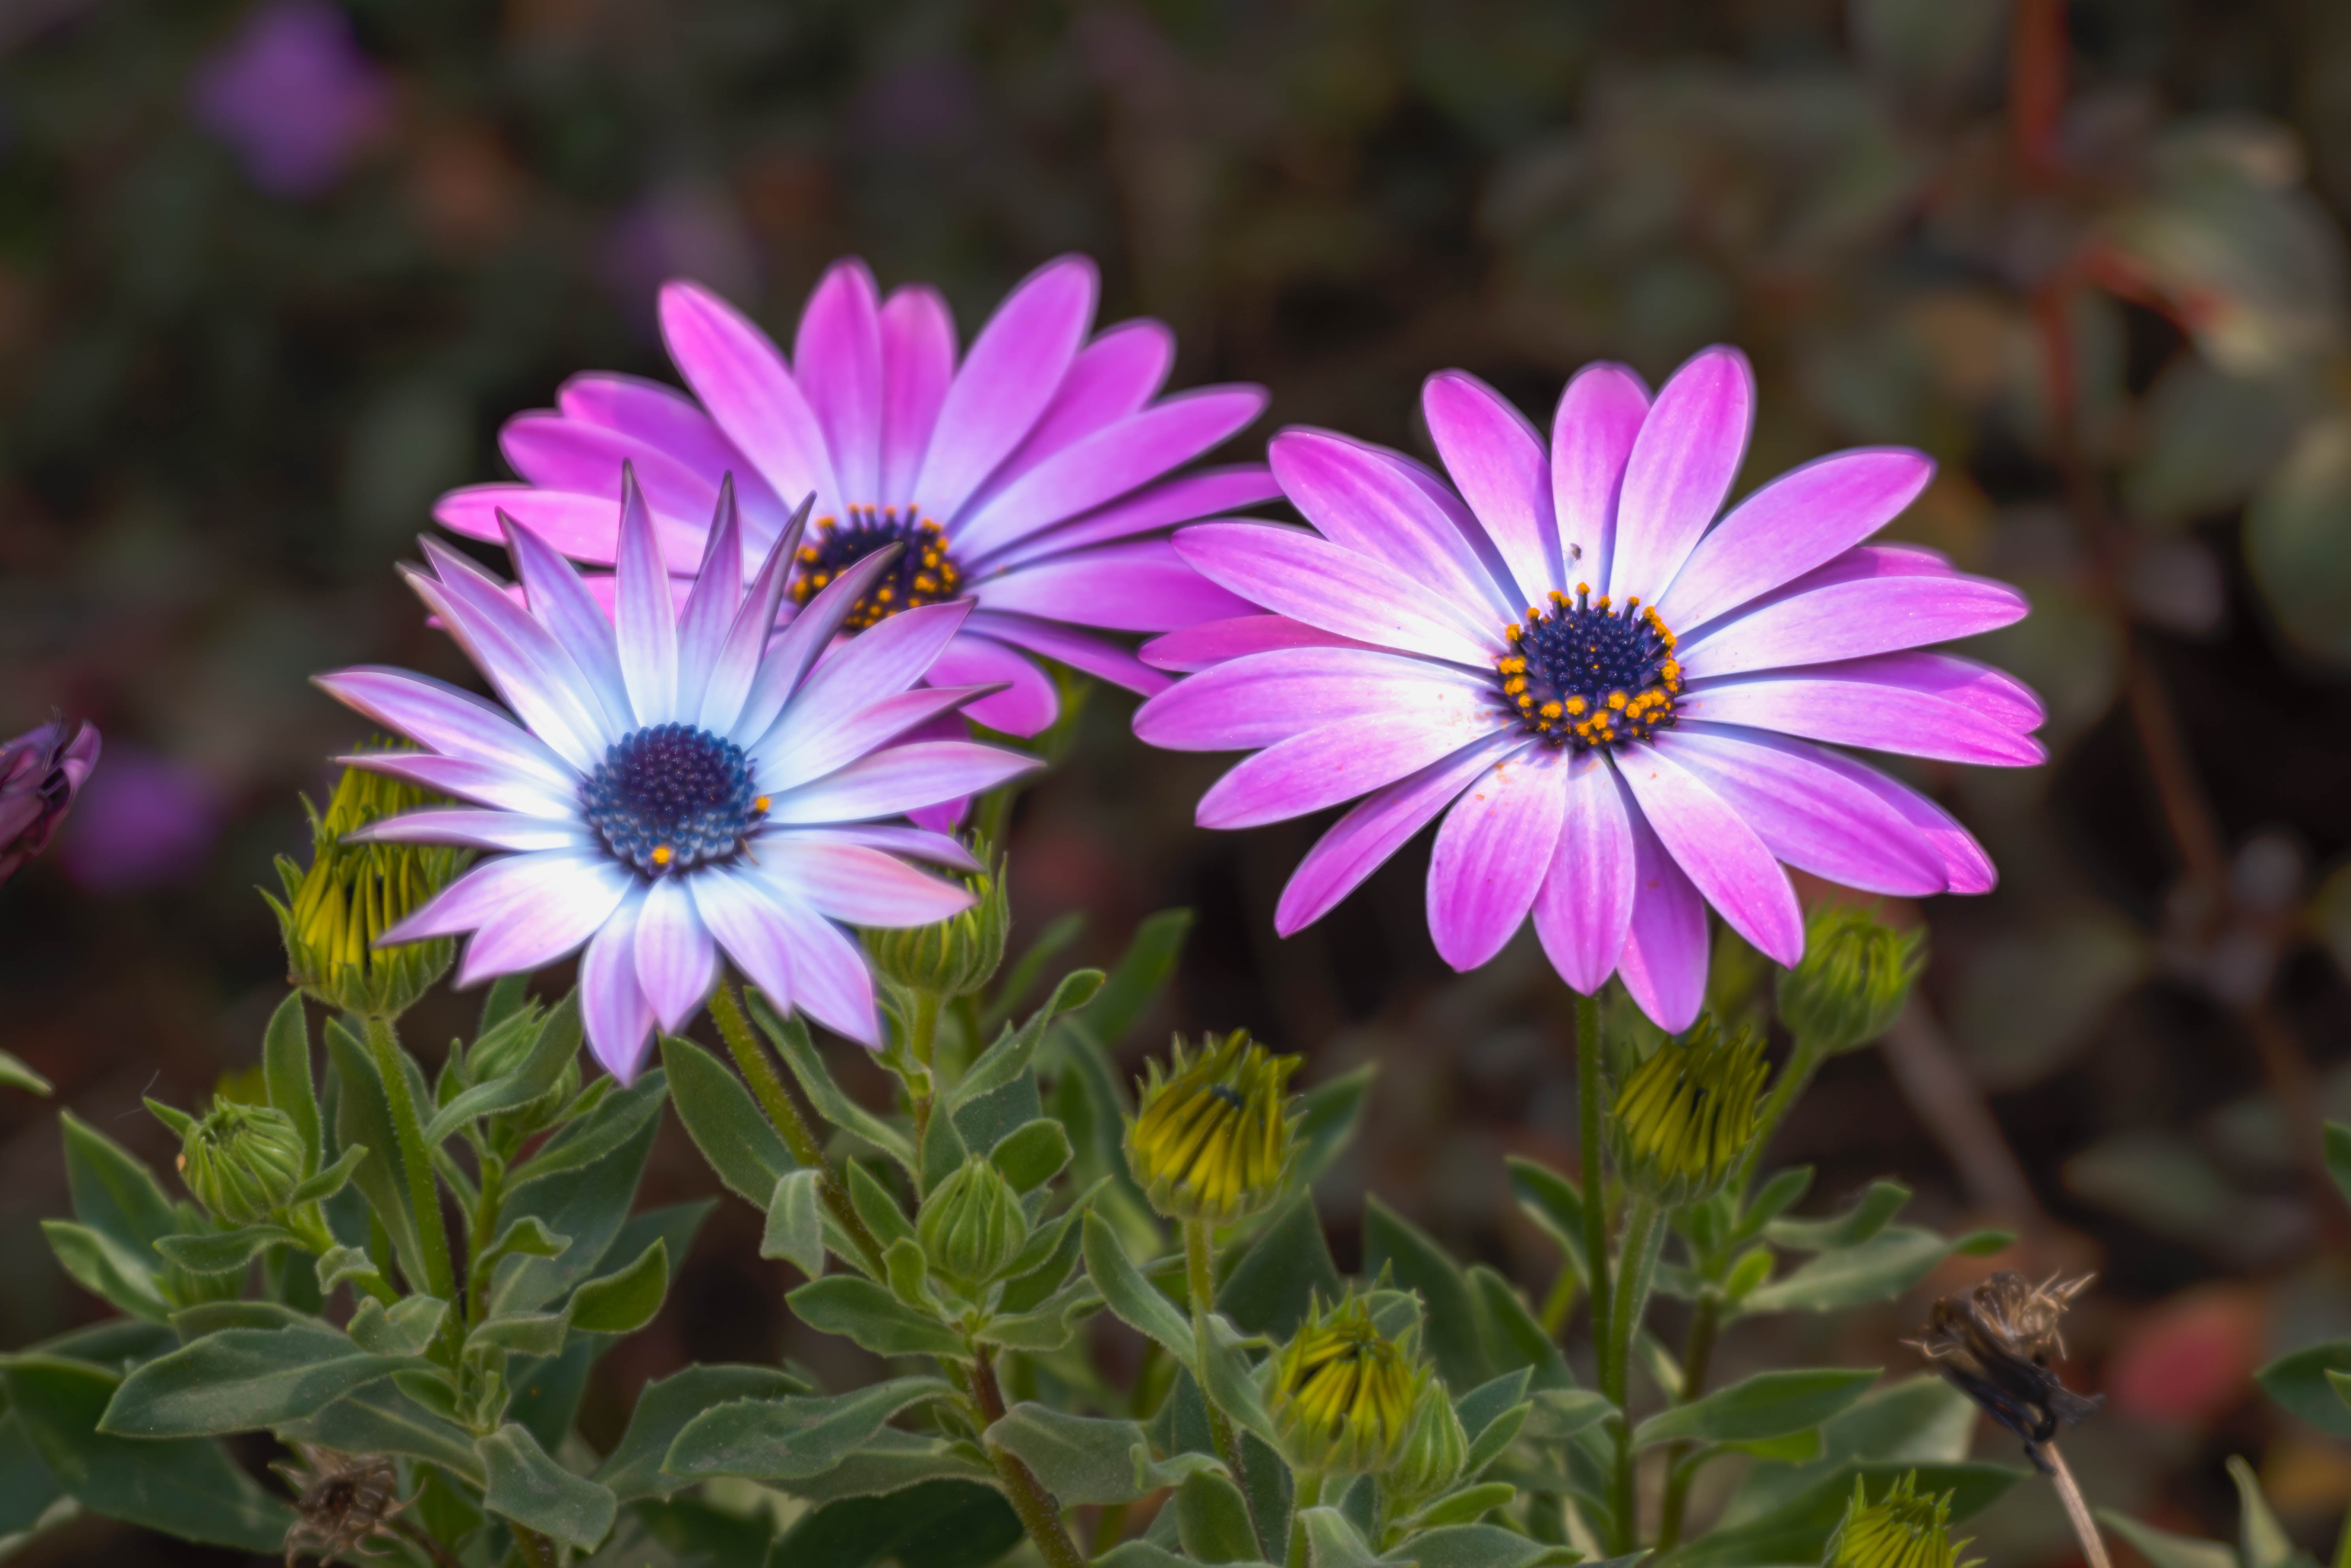 purple daisy photography, echinacea, coneflower